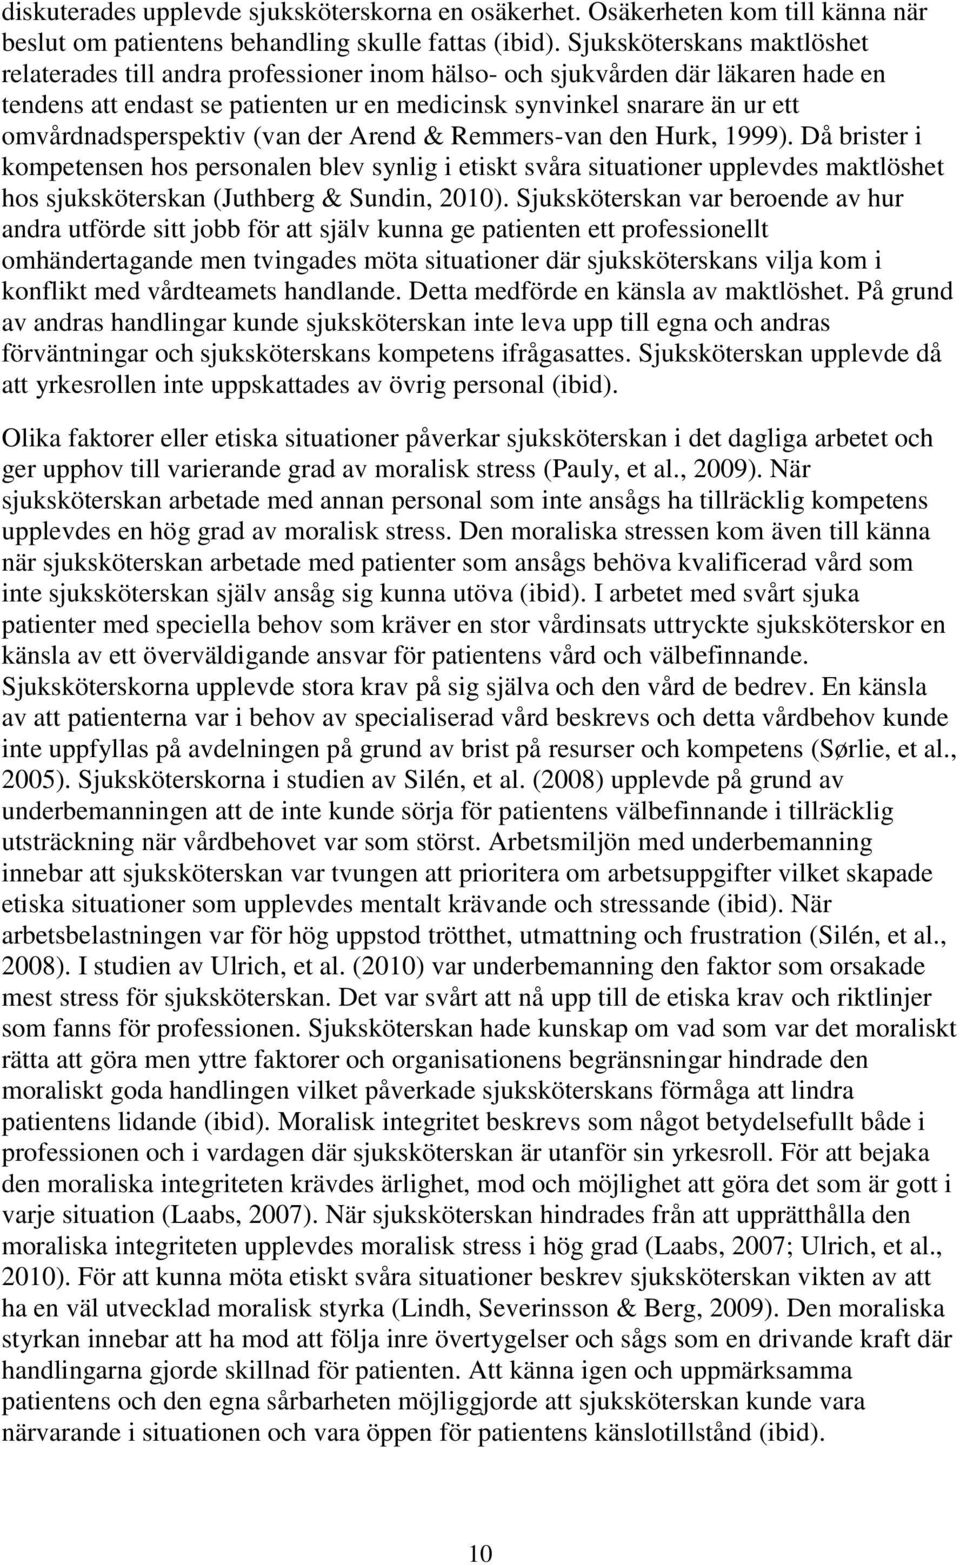 omvårdnadsperspektiv (van der Arend & Remmers-van den Hurk, 1999).